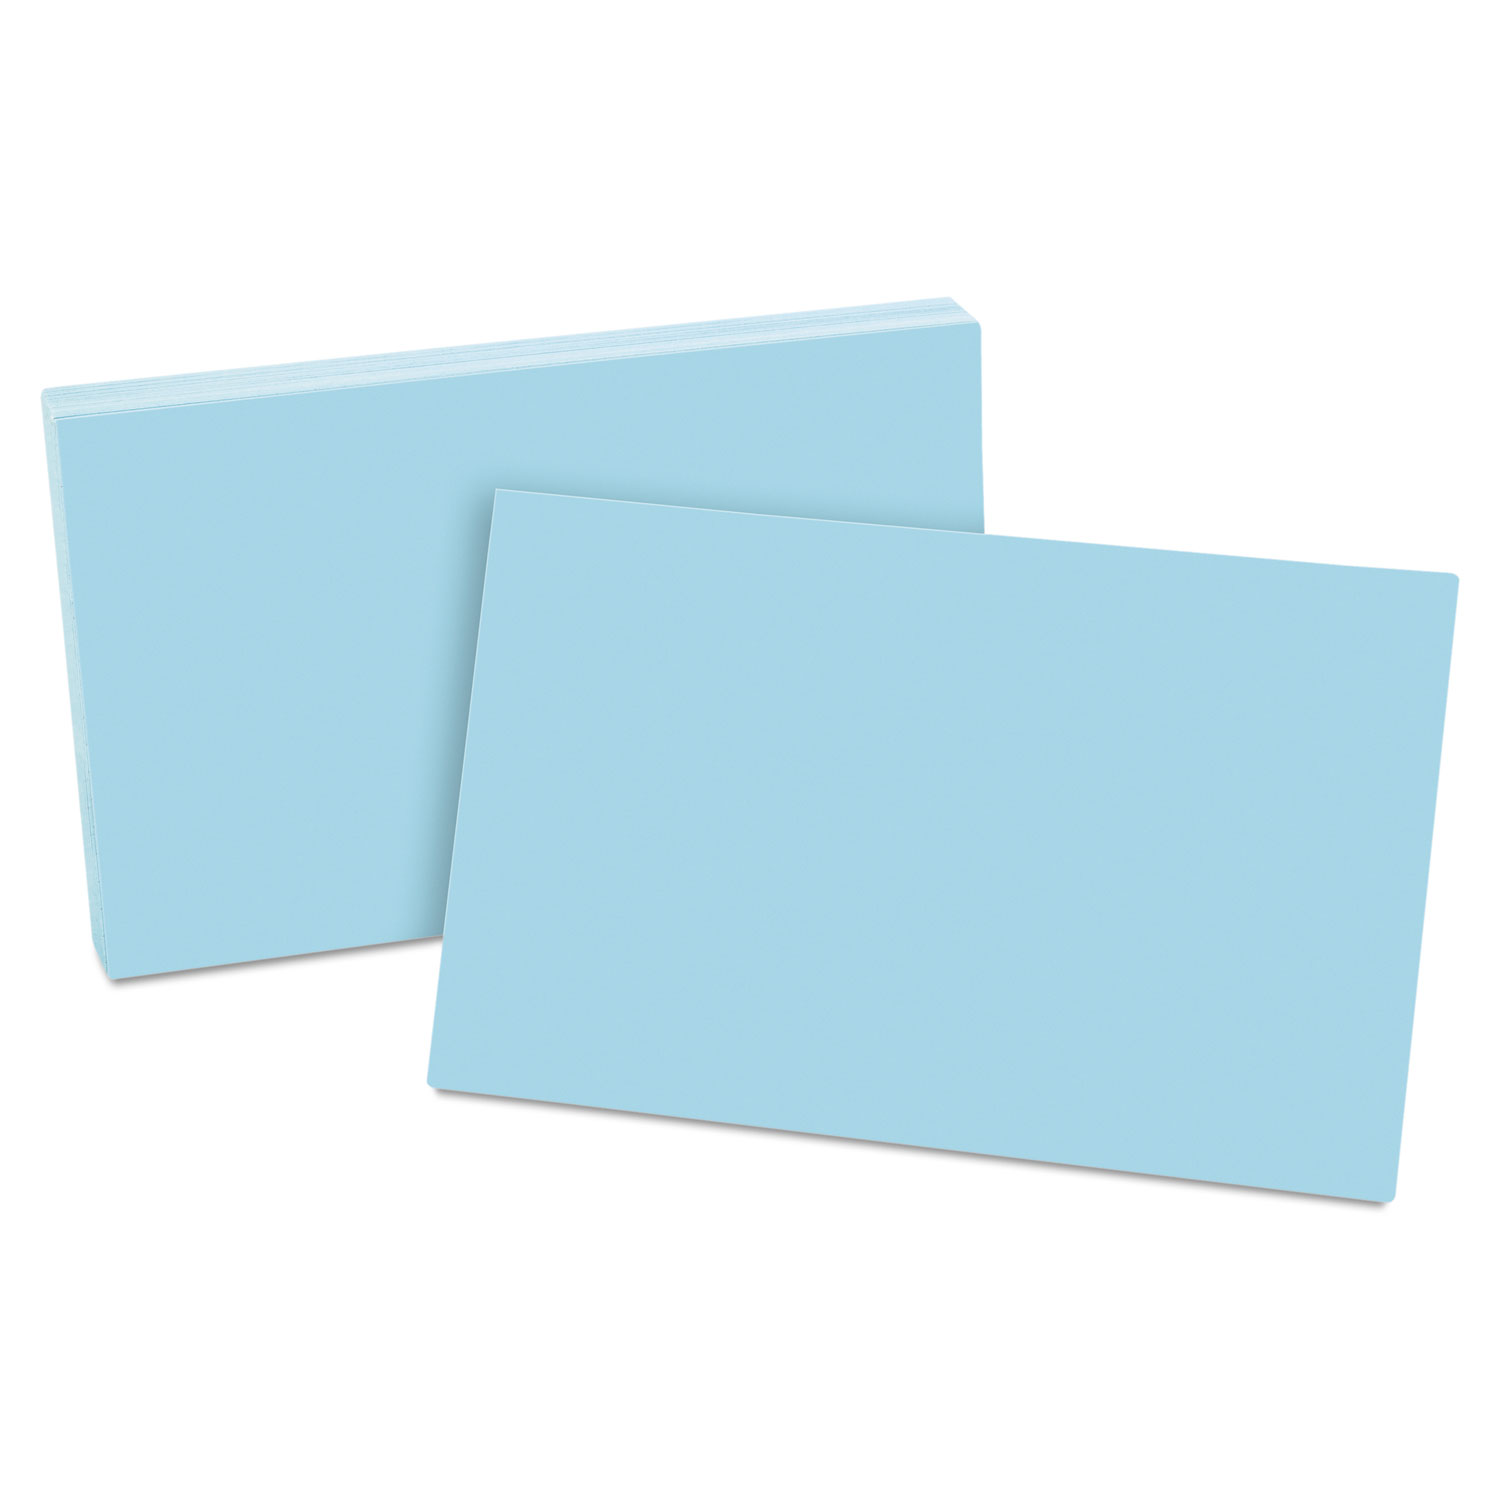  Oxford 7520 BLU Unruled Index Cards, 5 x 8, Blue, 100/Pack (OXF7520BLU) 